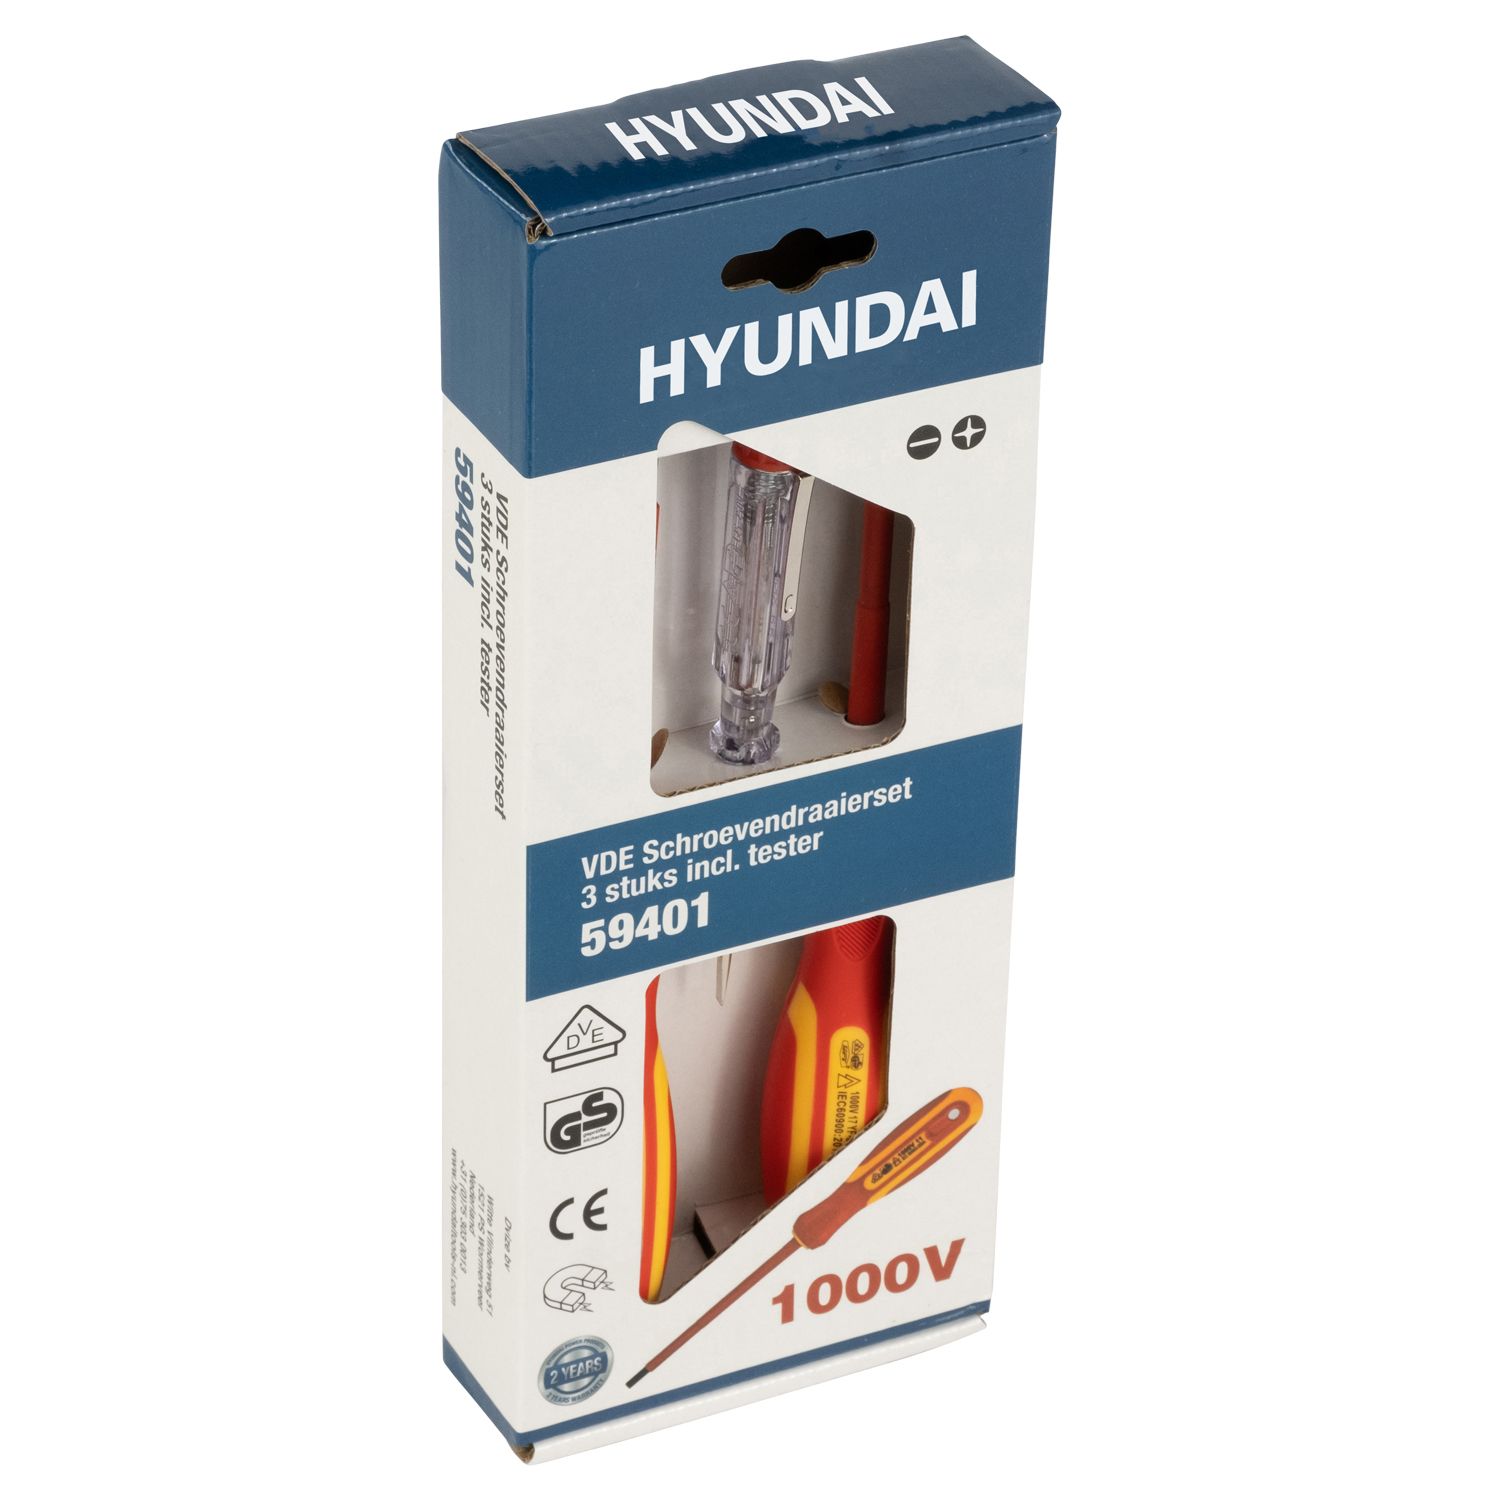 Hyundai VDE Screwdrivers 3x